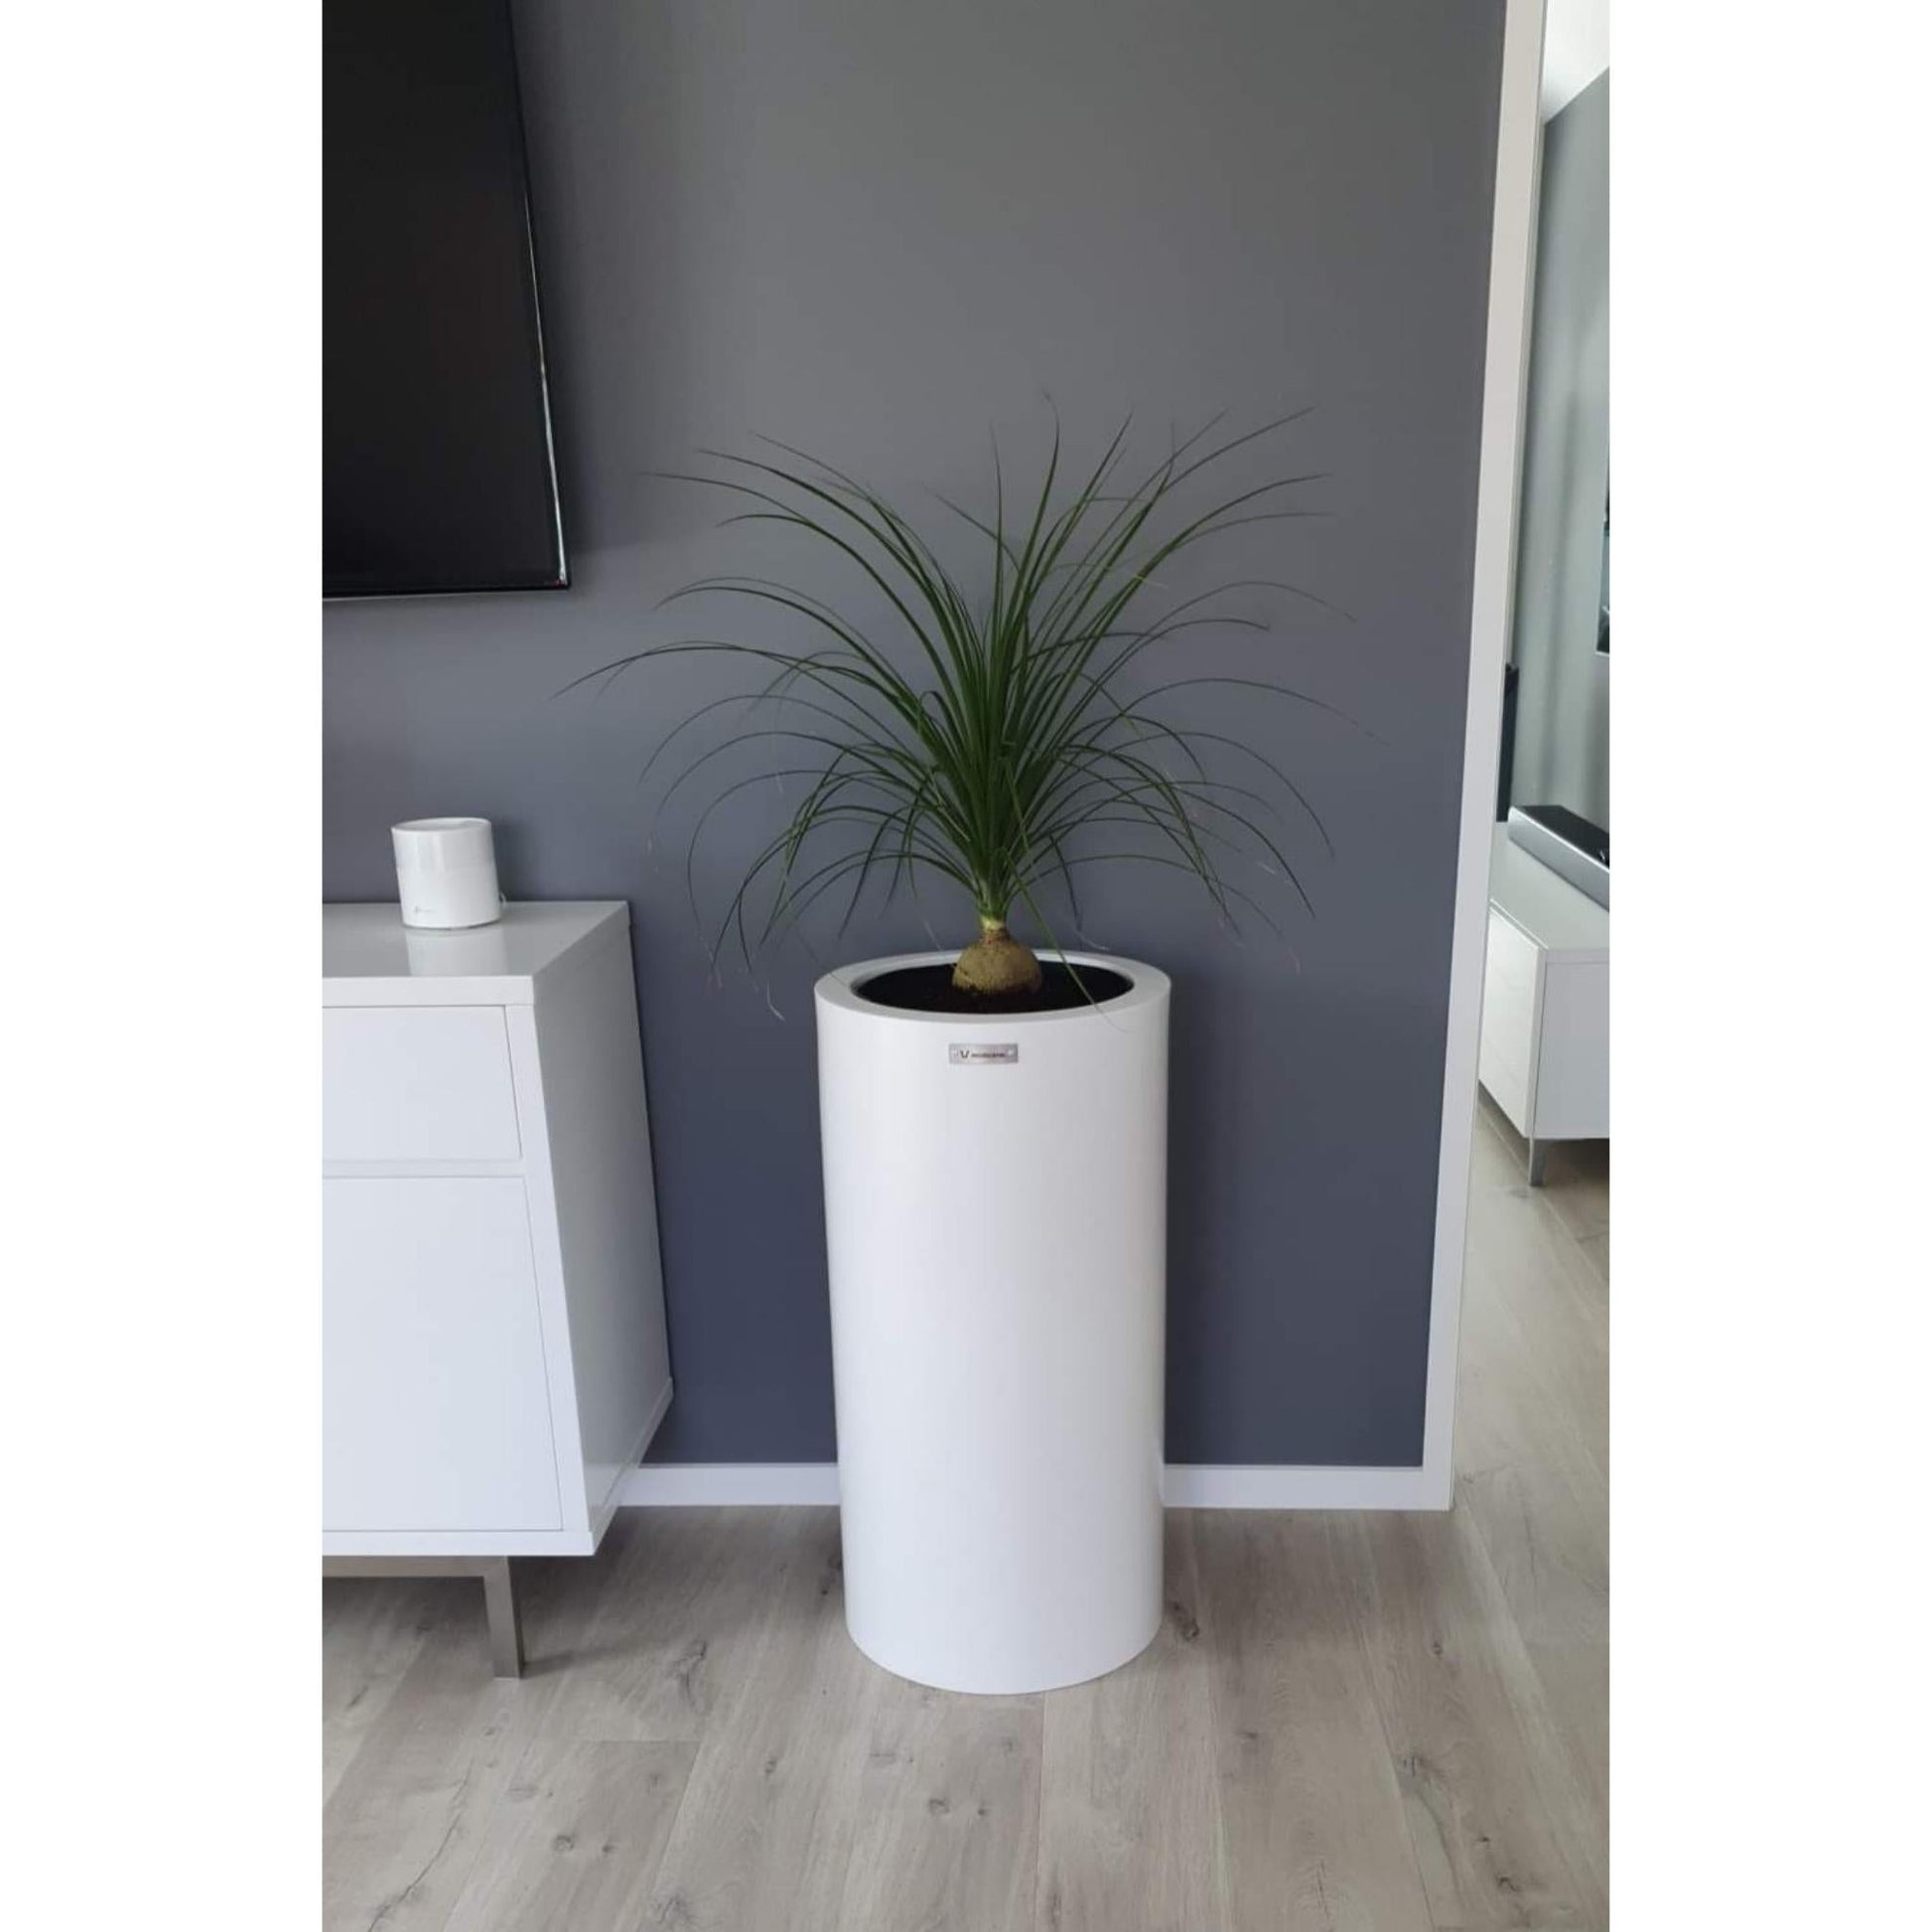 A white indoor cylinder planter made by Modscene.